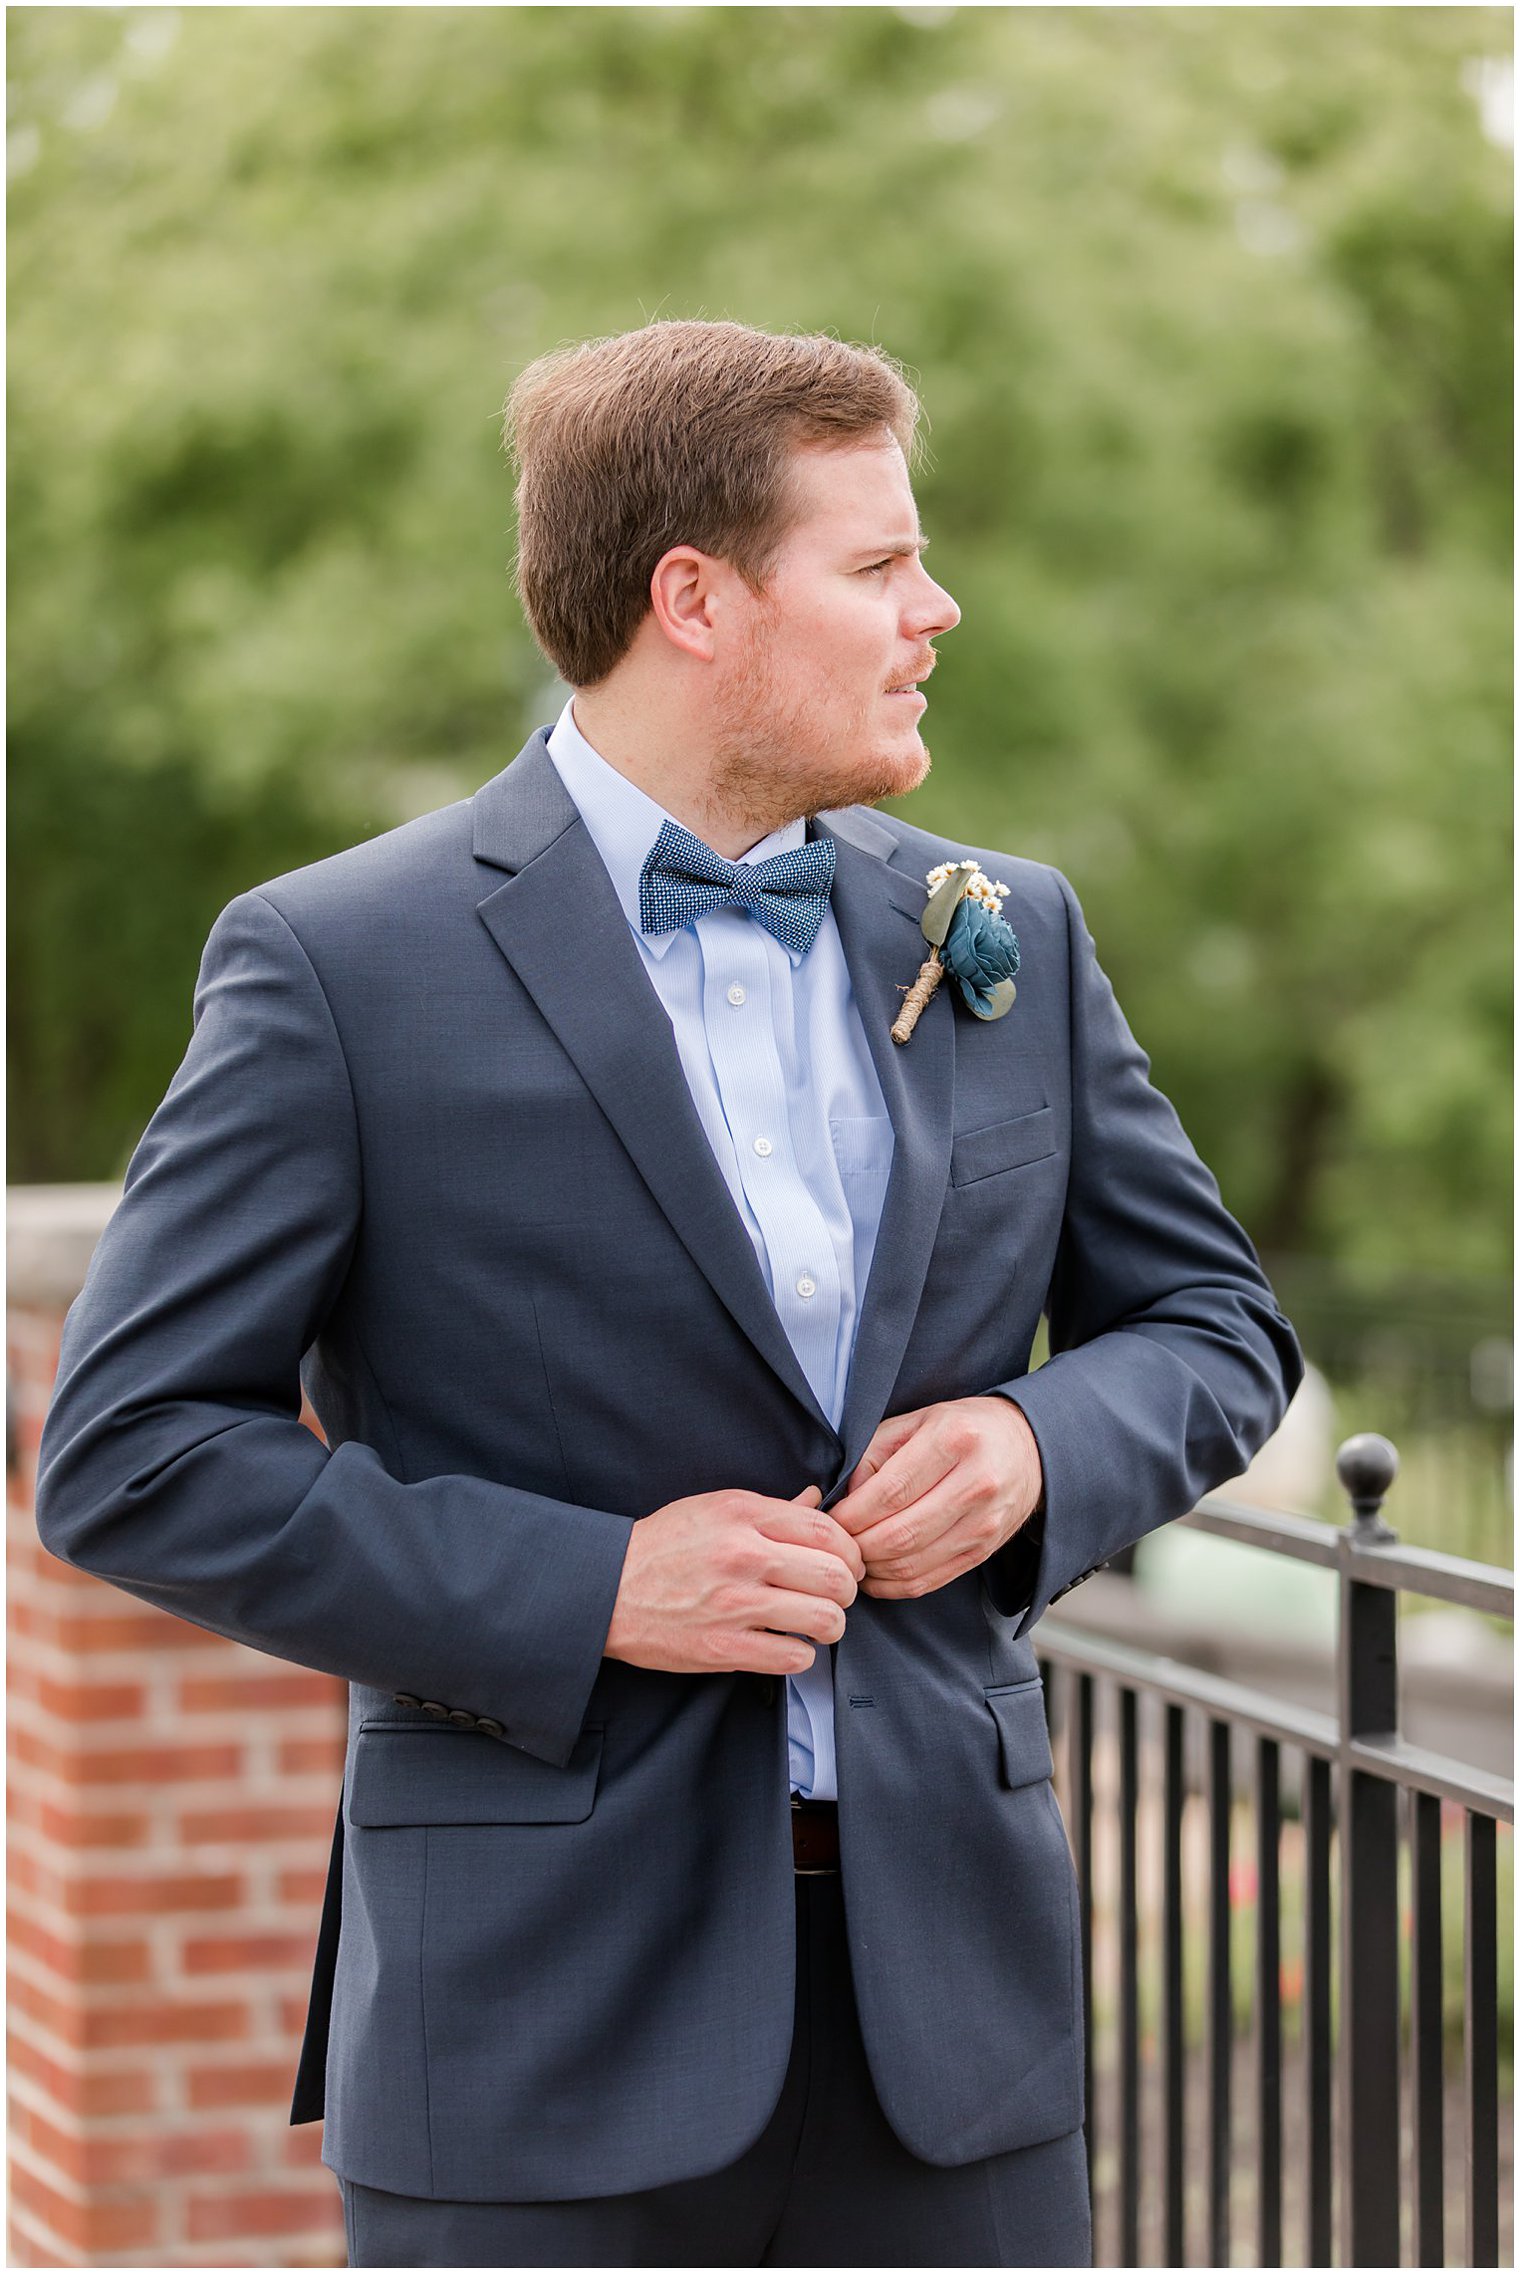 groom looks over shoulder while buttoning suit jacket 